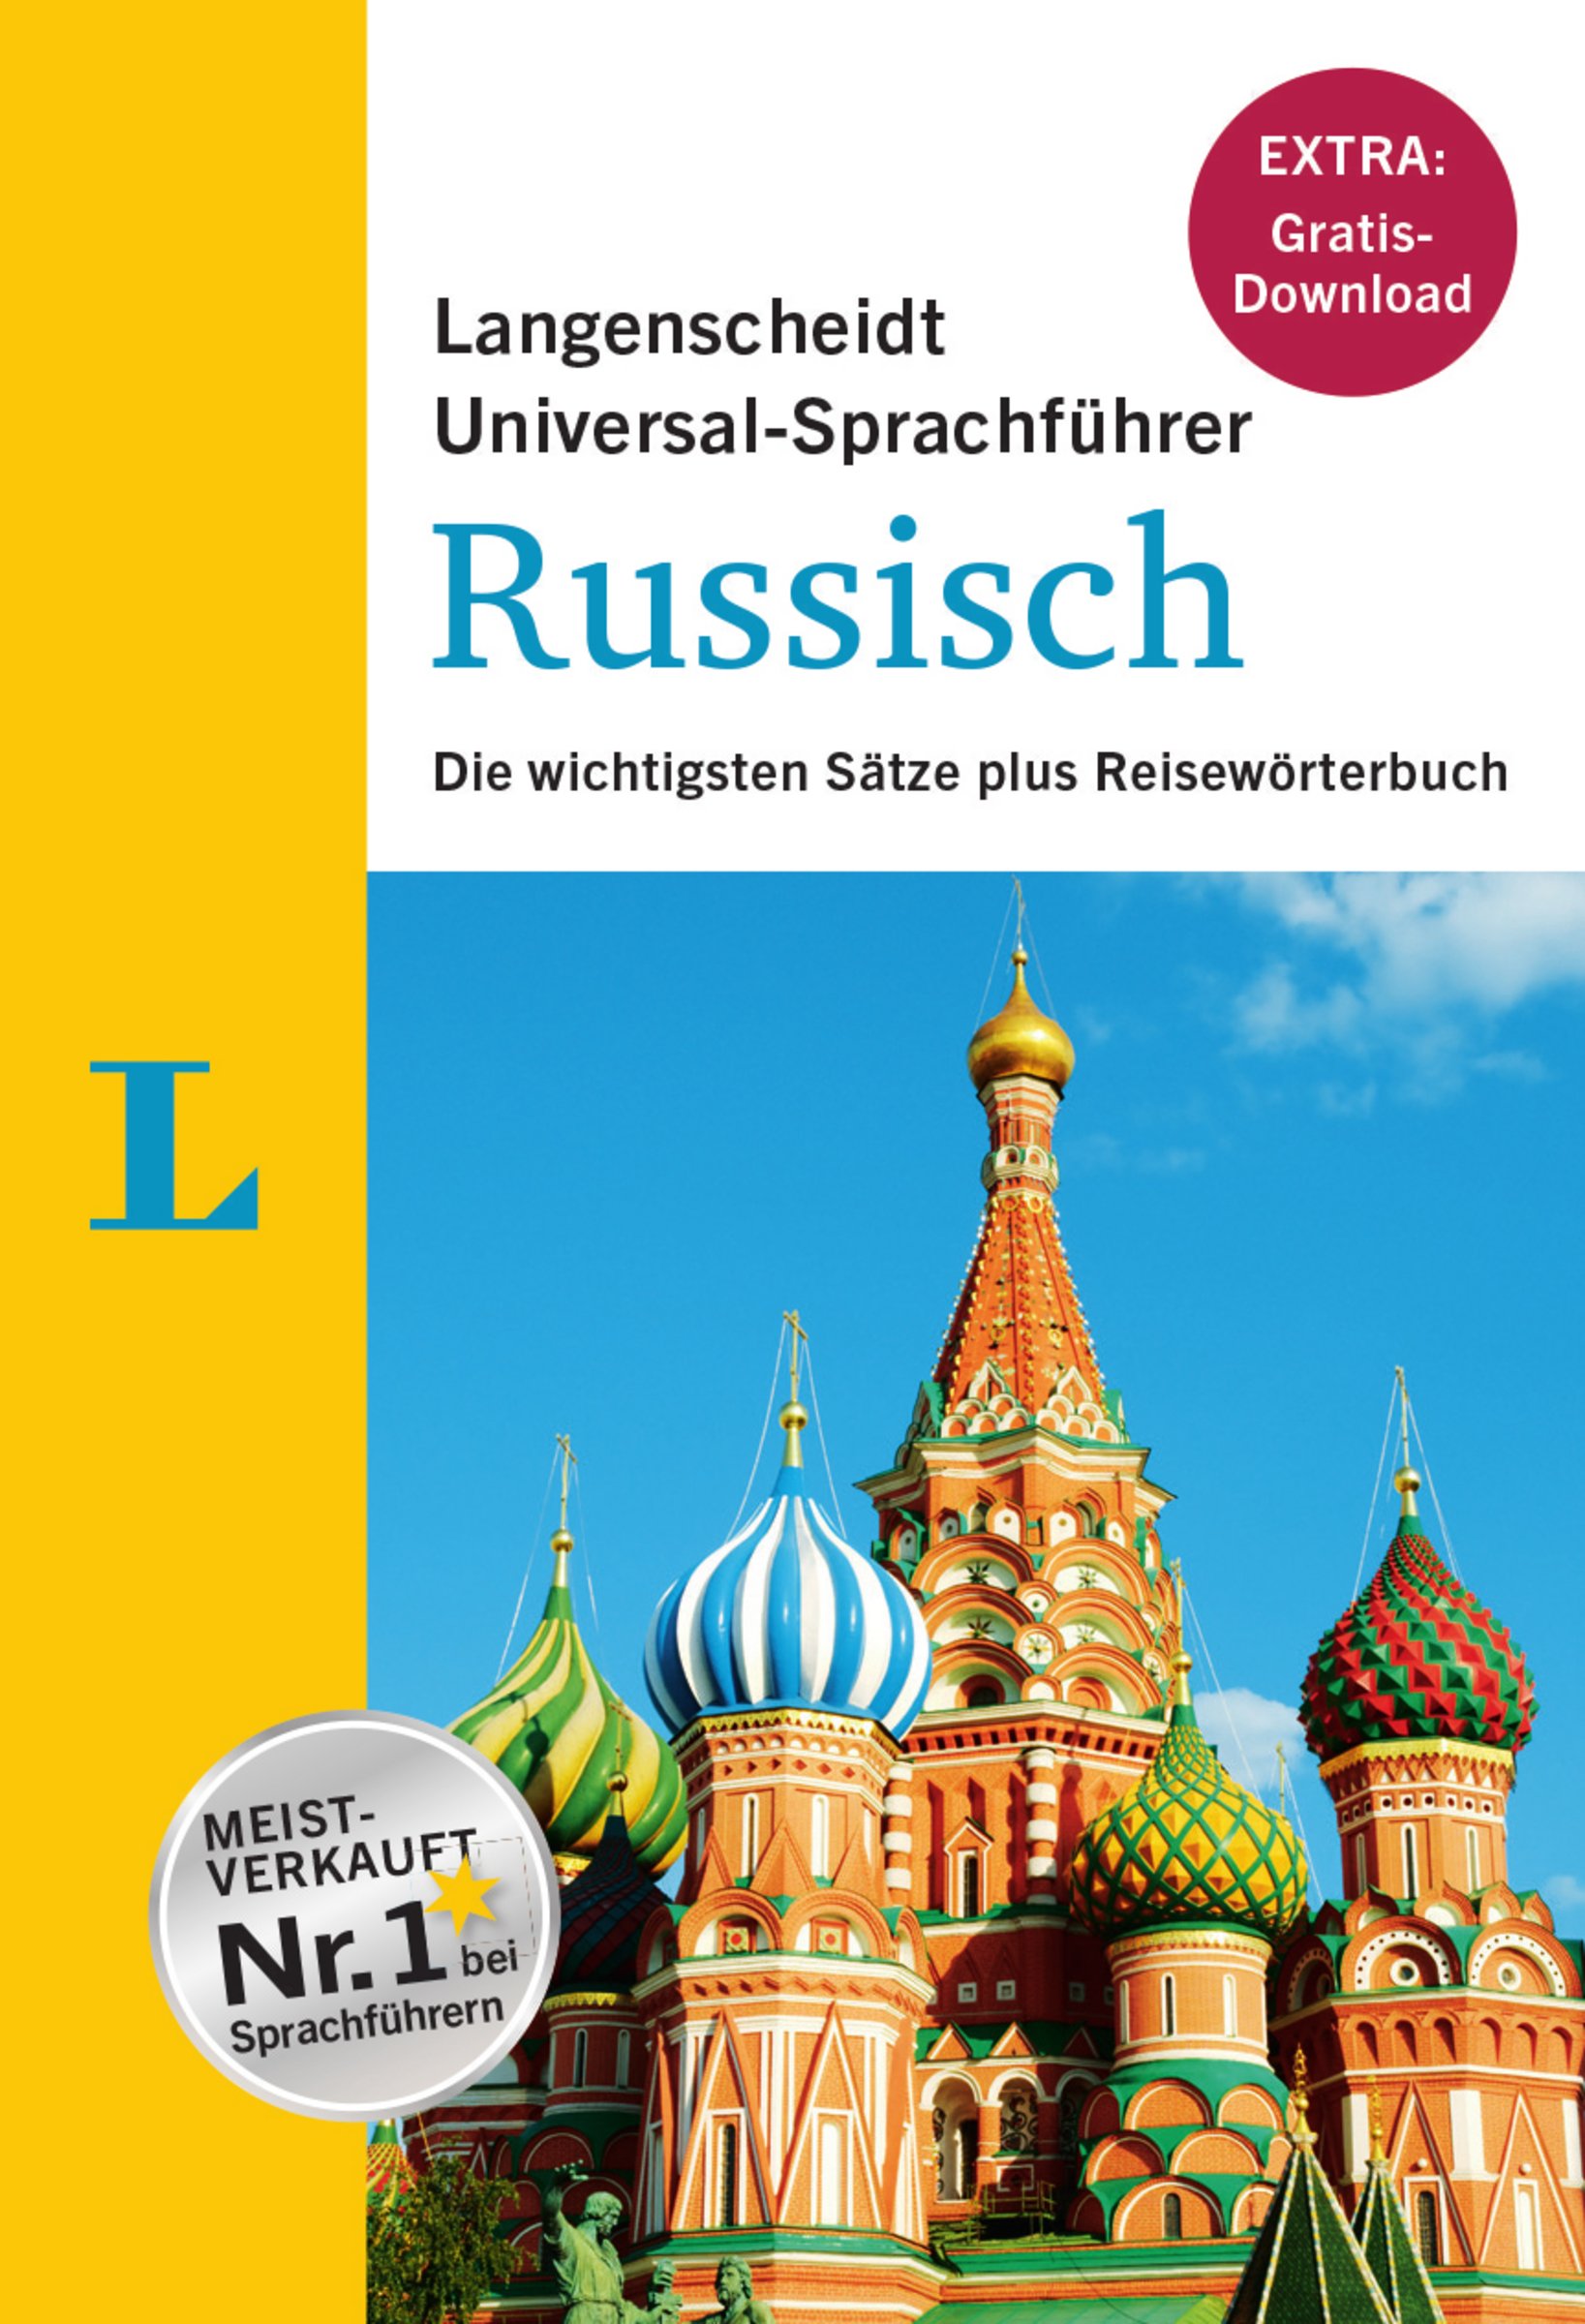 Universal-Sprachfuhrer Russisch / Разговорник